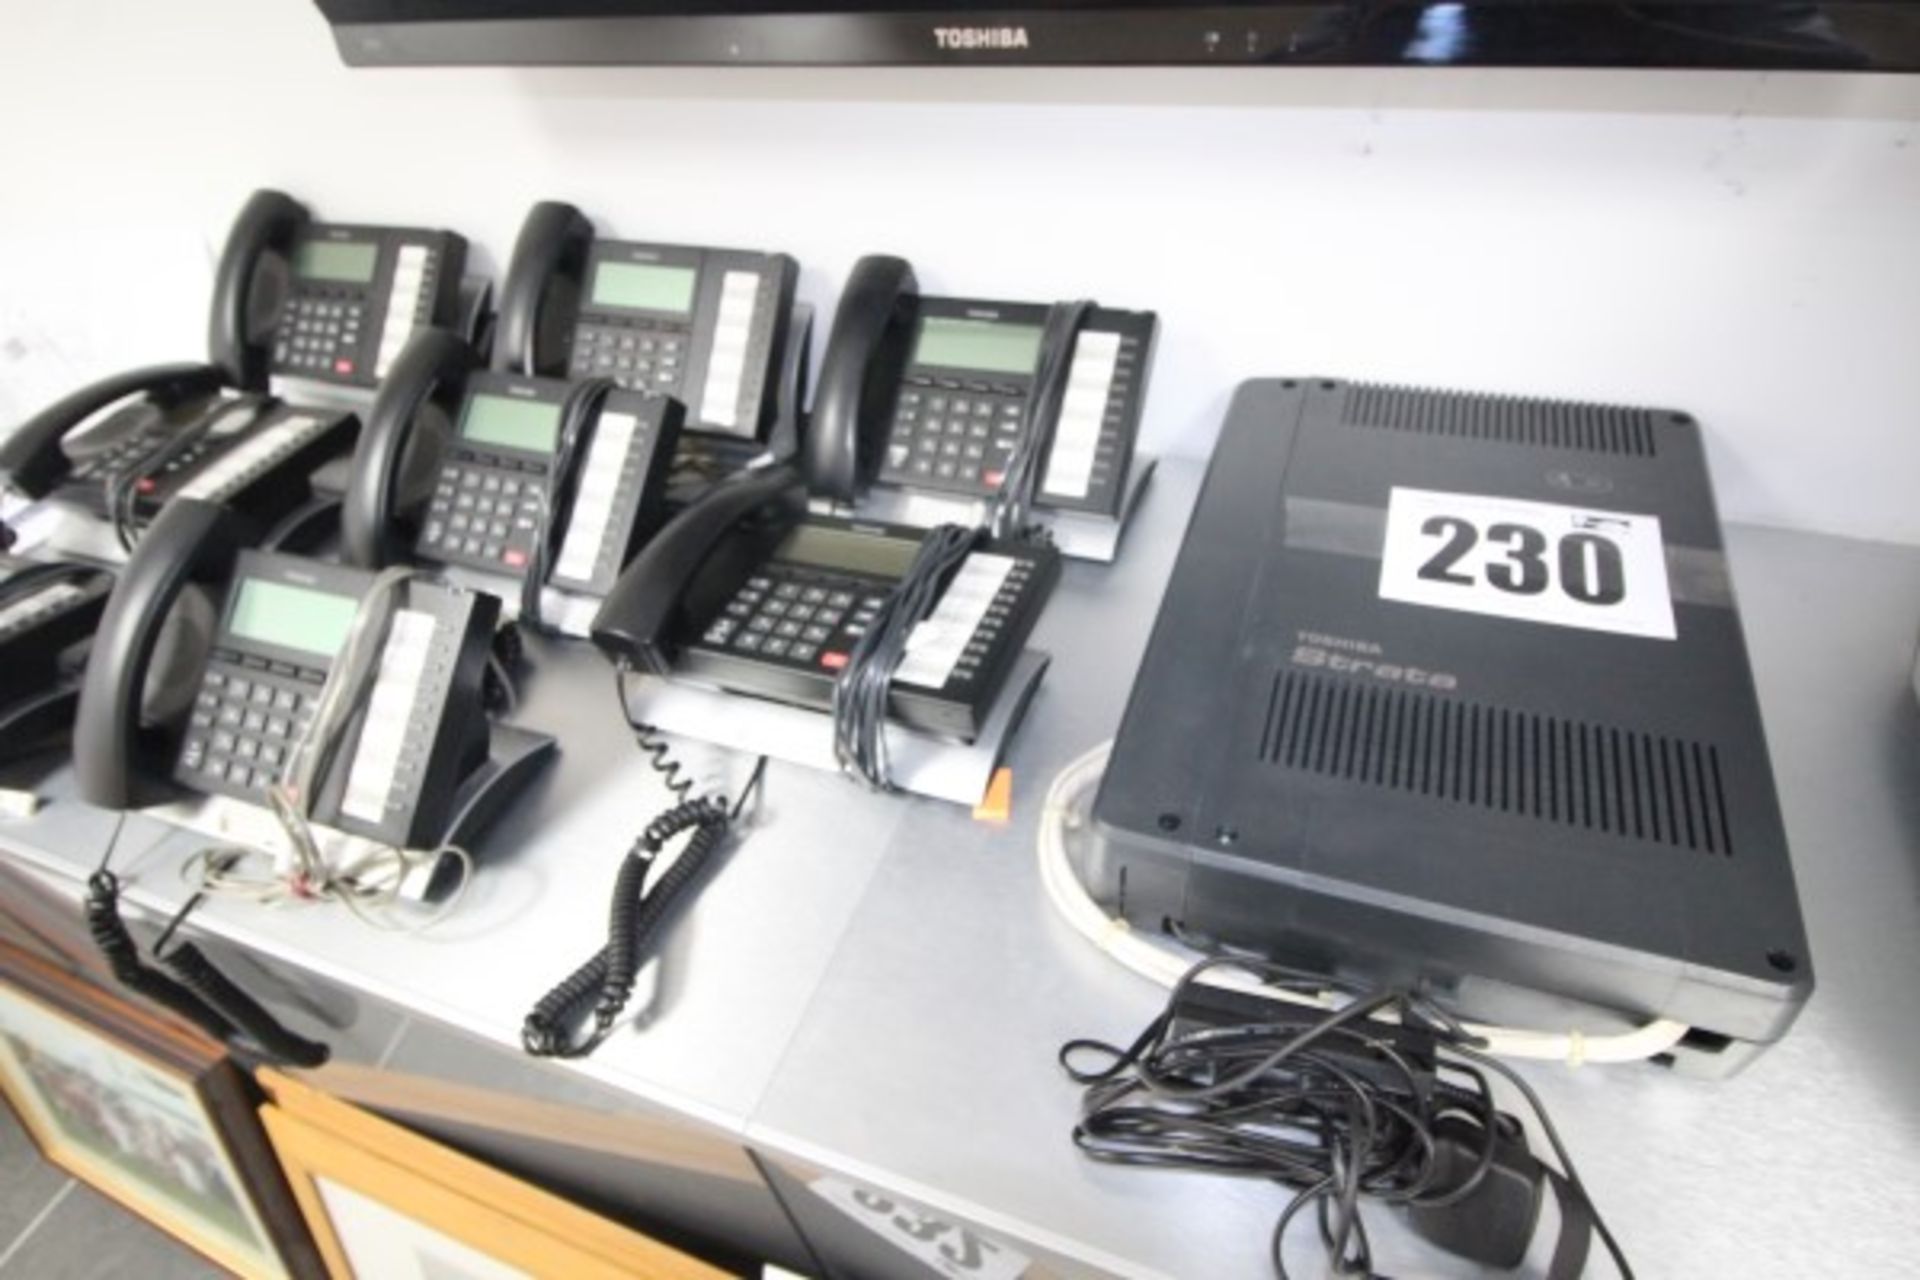 TOSHIBA STRATA TELEPHONE SYSTEM COMPRISING 8 BLACK HANDSETS & CONTROL BOX